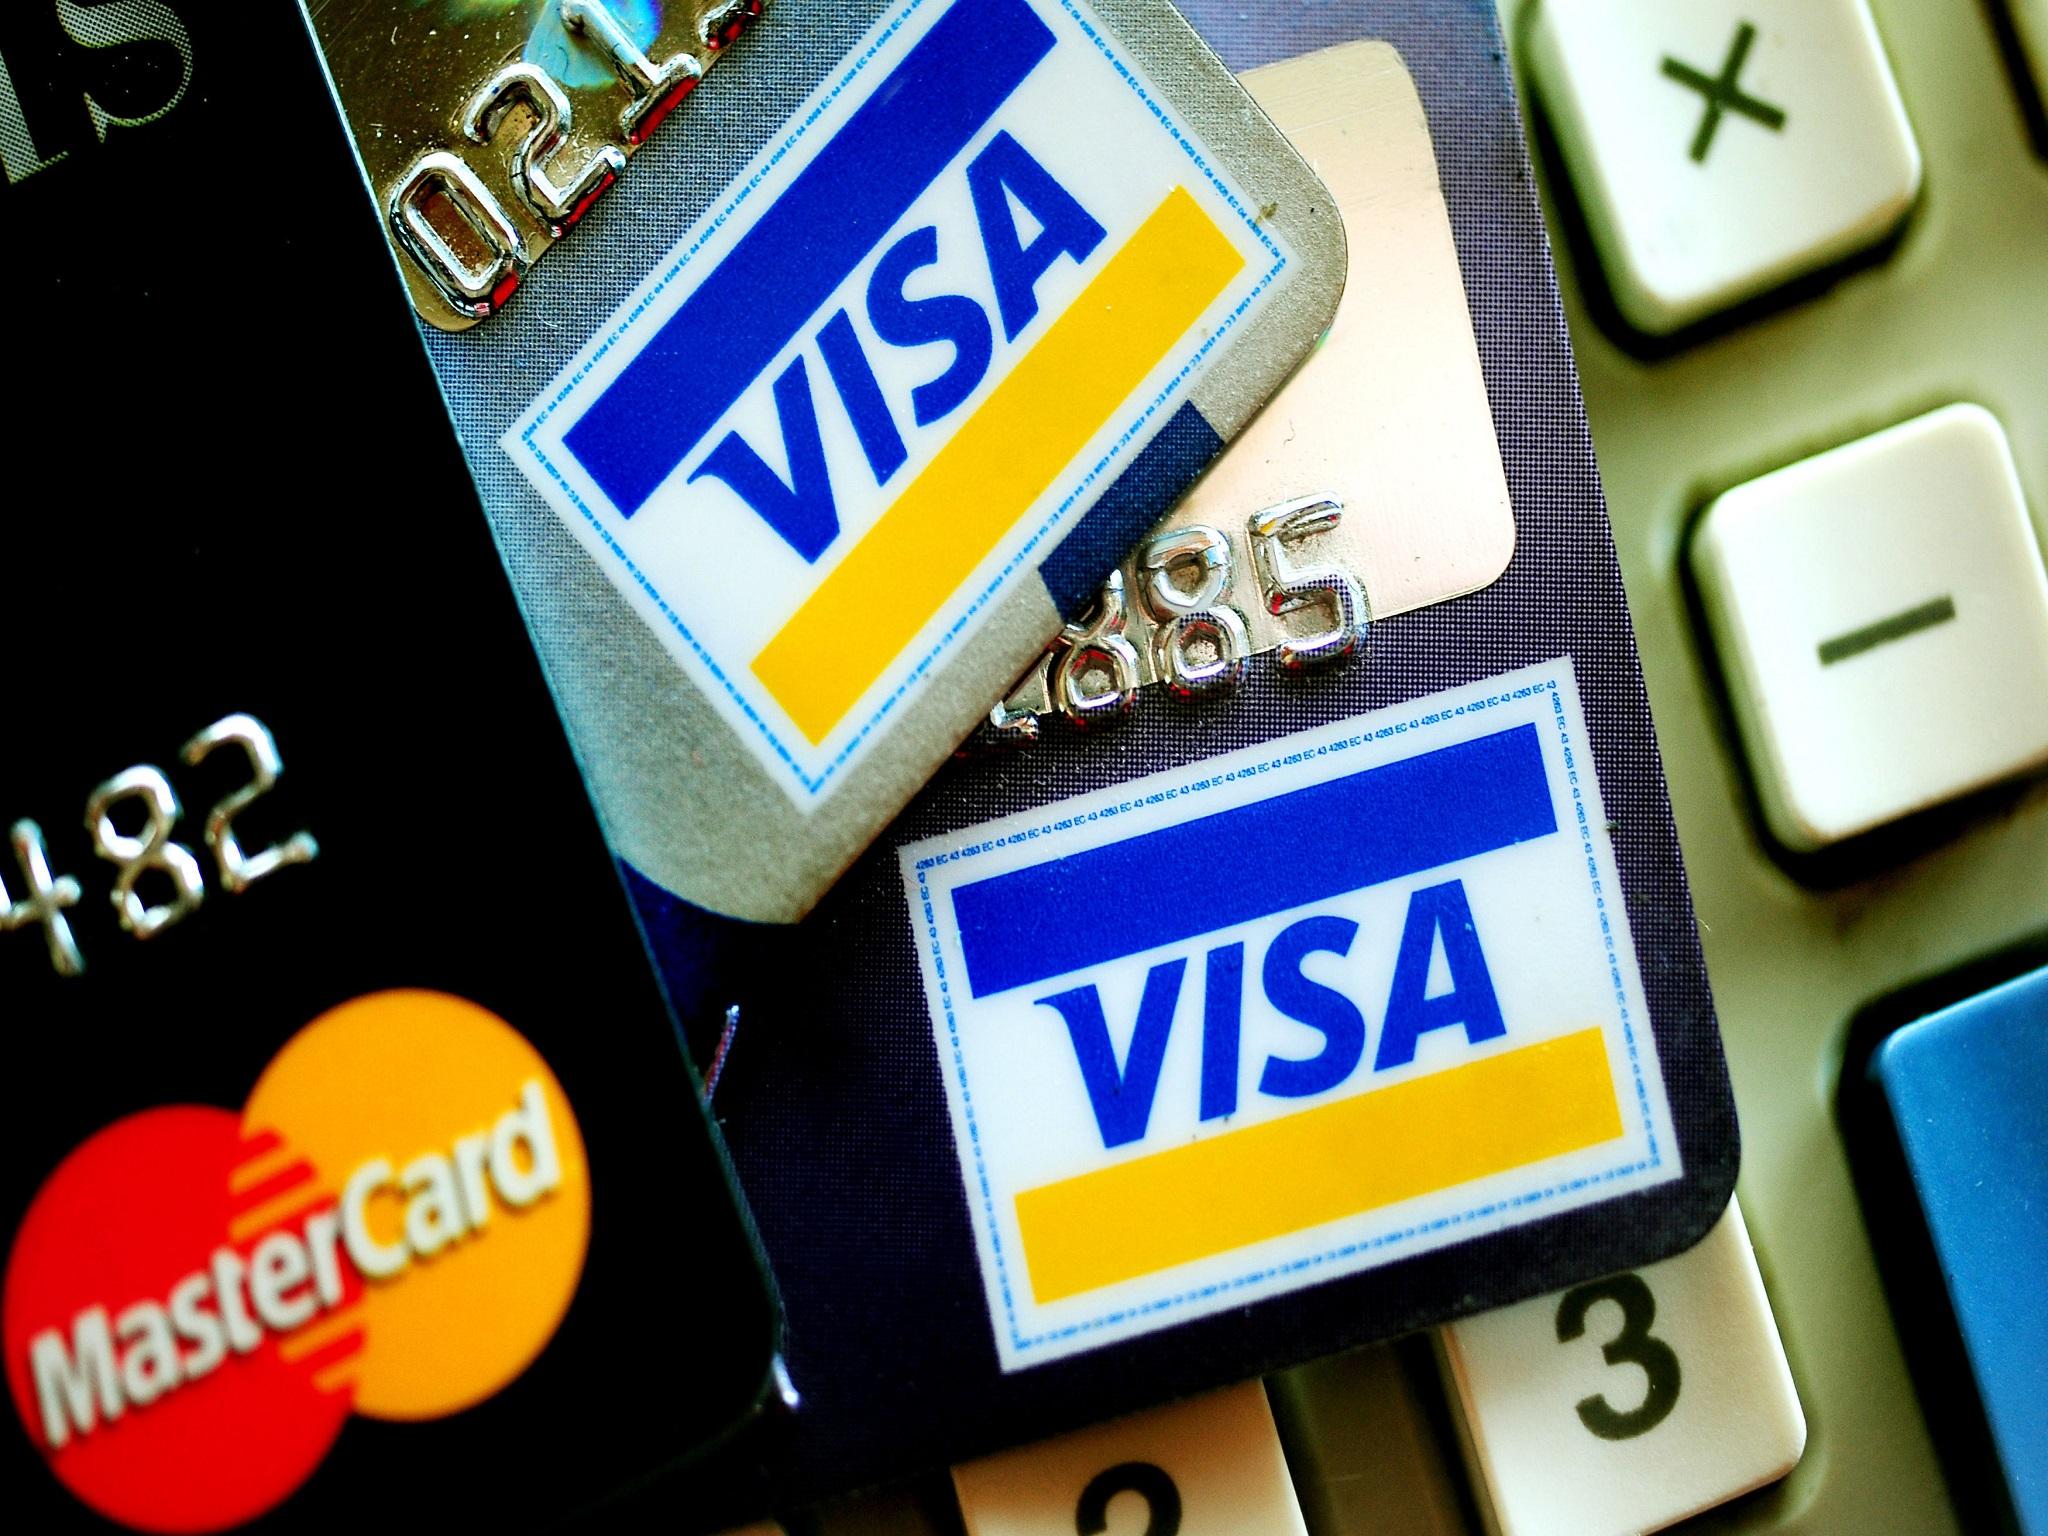 Credit card debt is growing rapidly